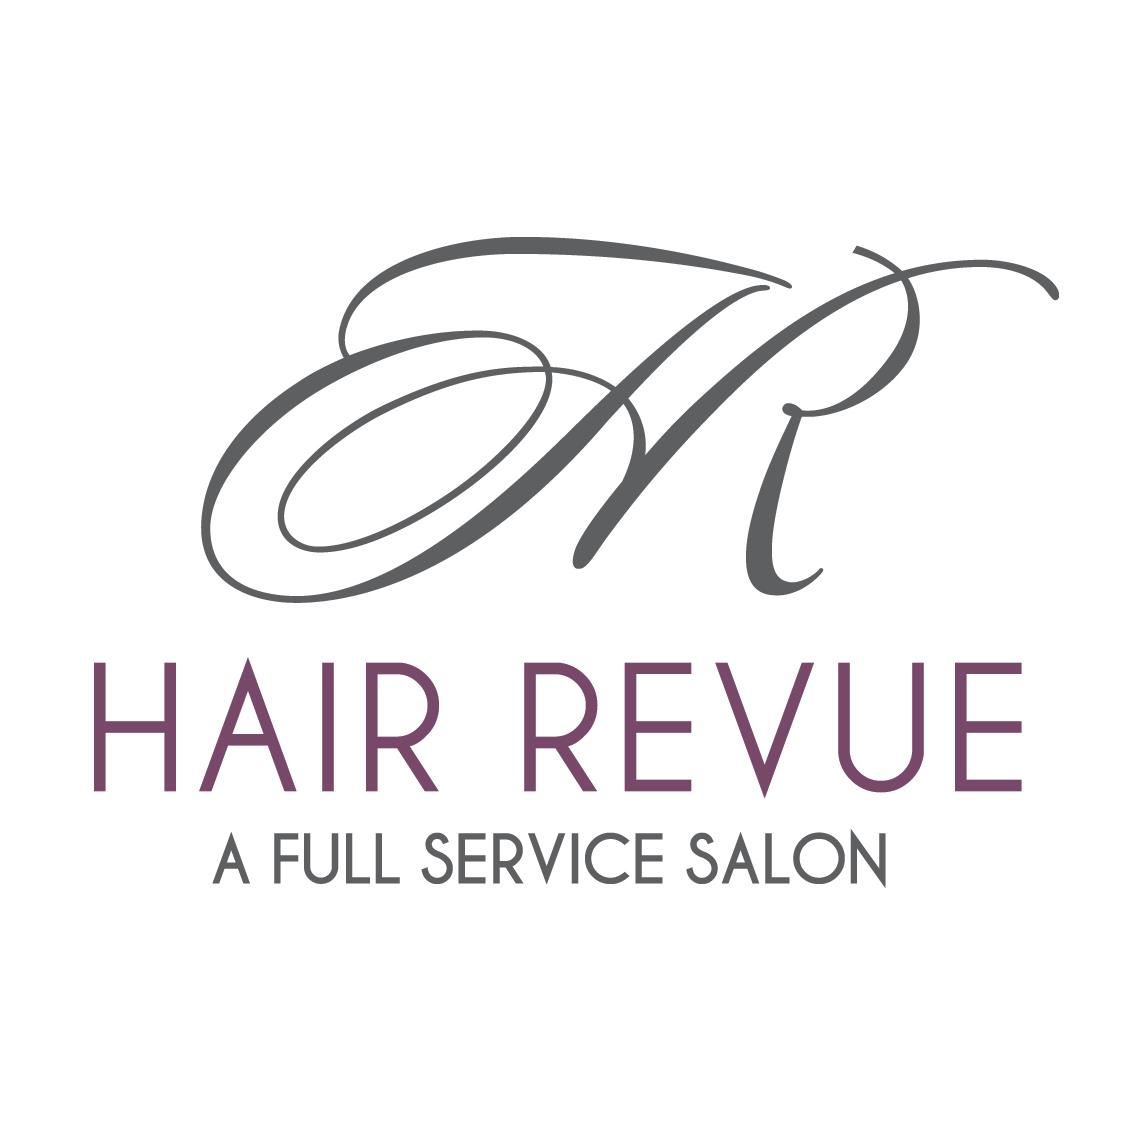 Hair Revue, Ltd. 1776 Meriden Rd, Wolcott Connecticut 06716